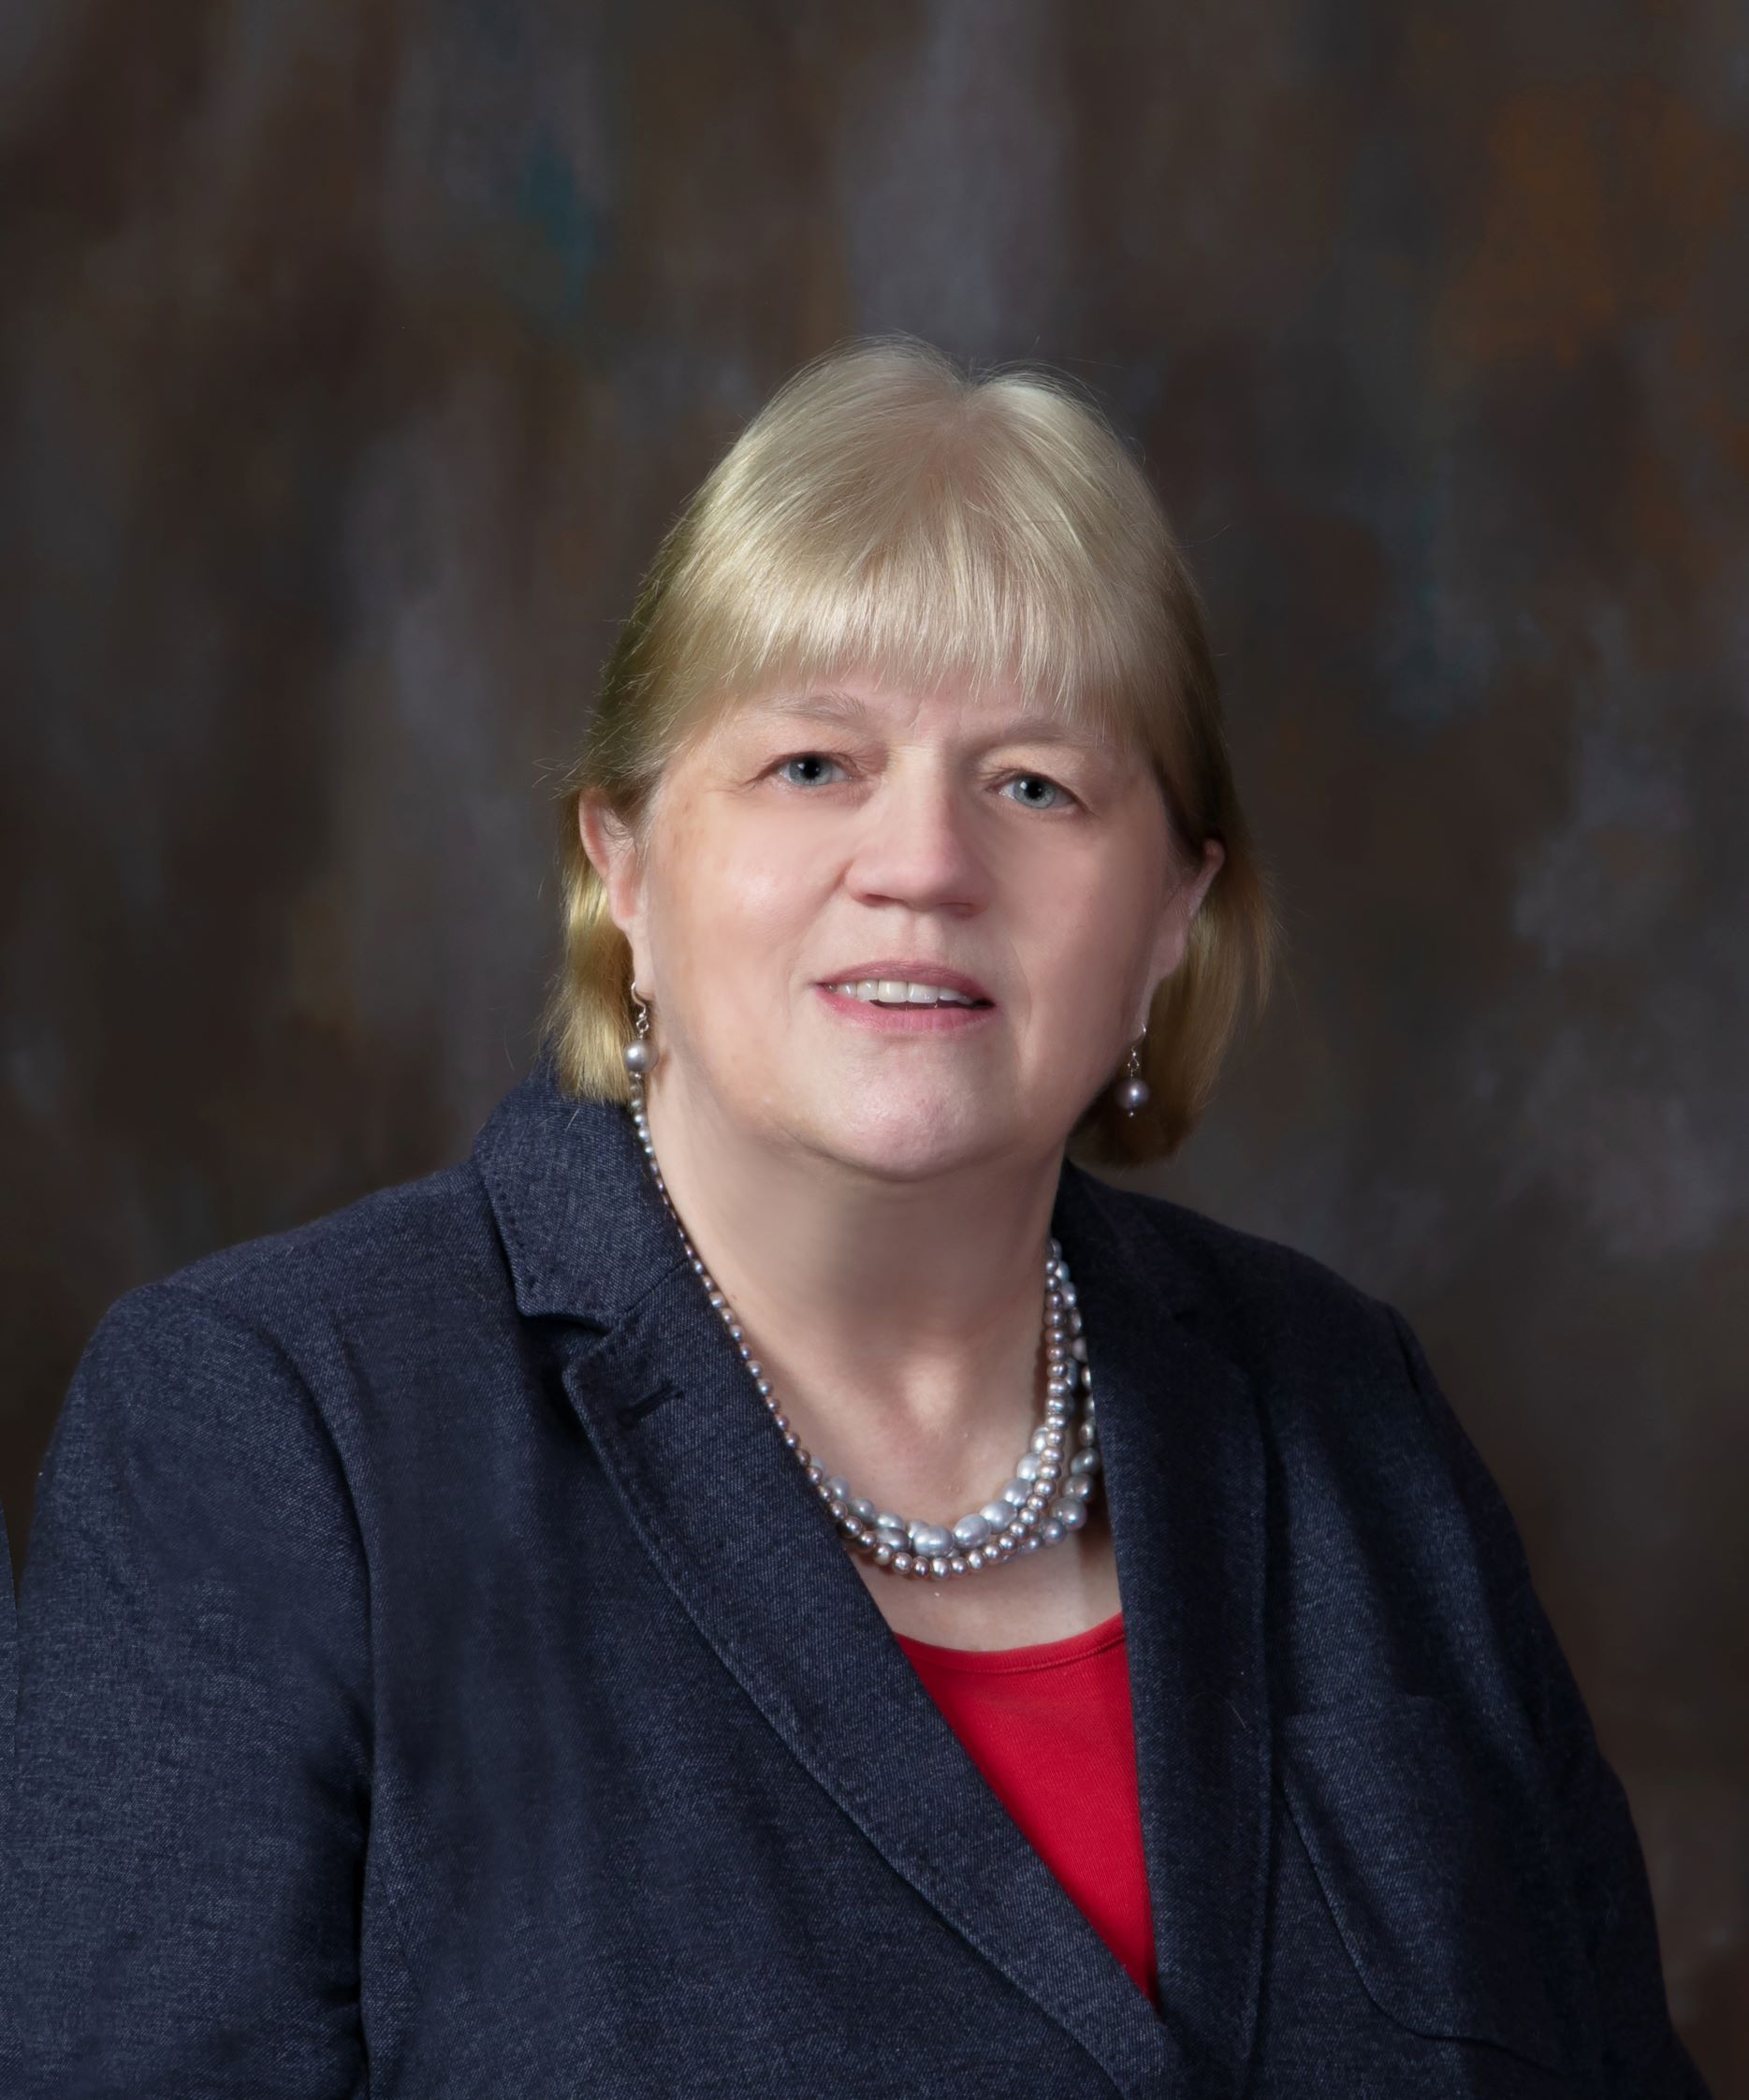 Susan Lanza, executive director of The House of the Good Shepherd